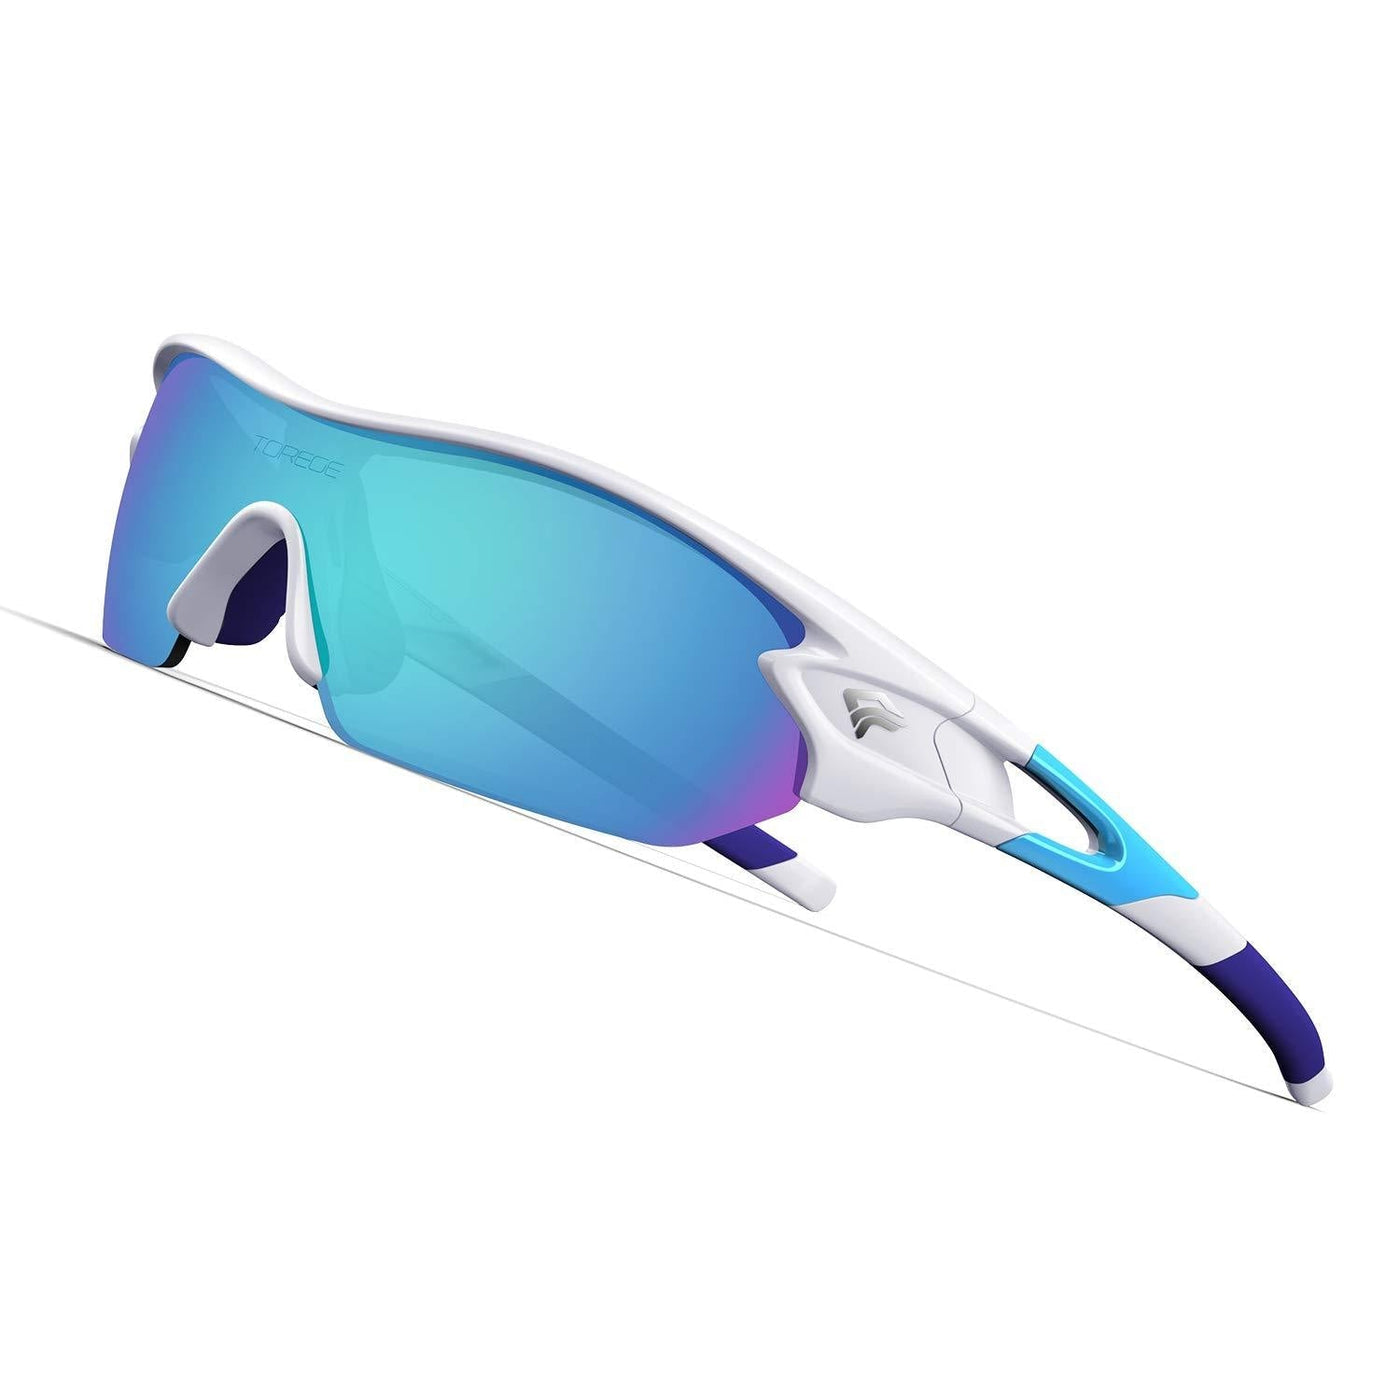 TOREGE Polarized Sports Sunglasses with 3 Interchangeable Lenes